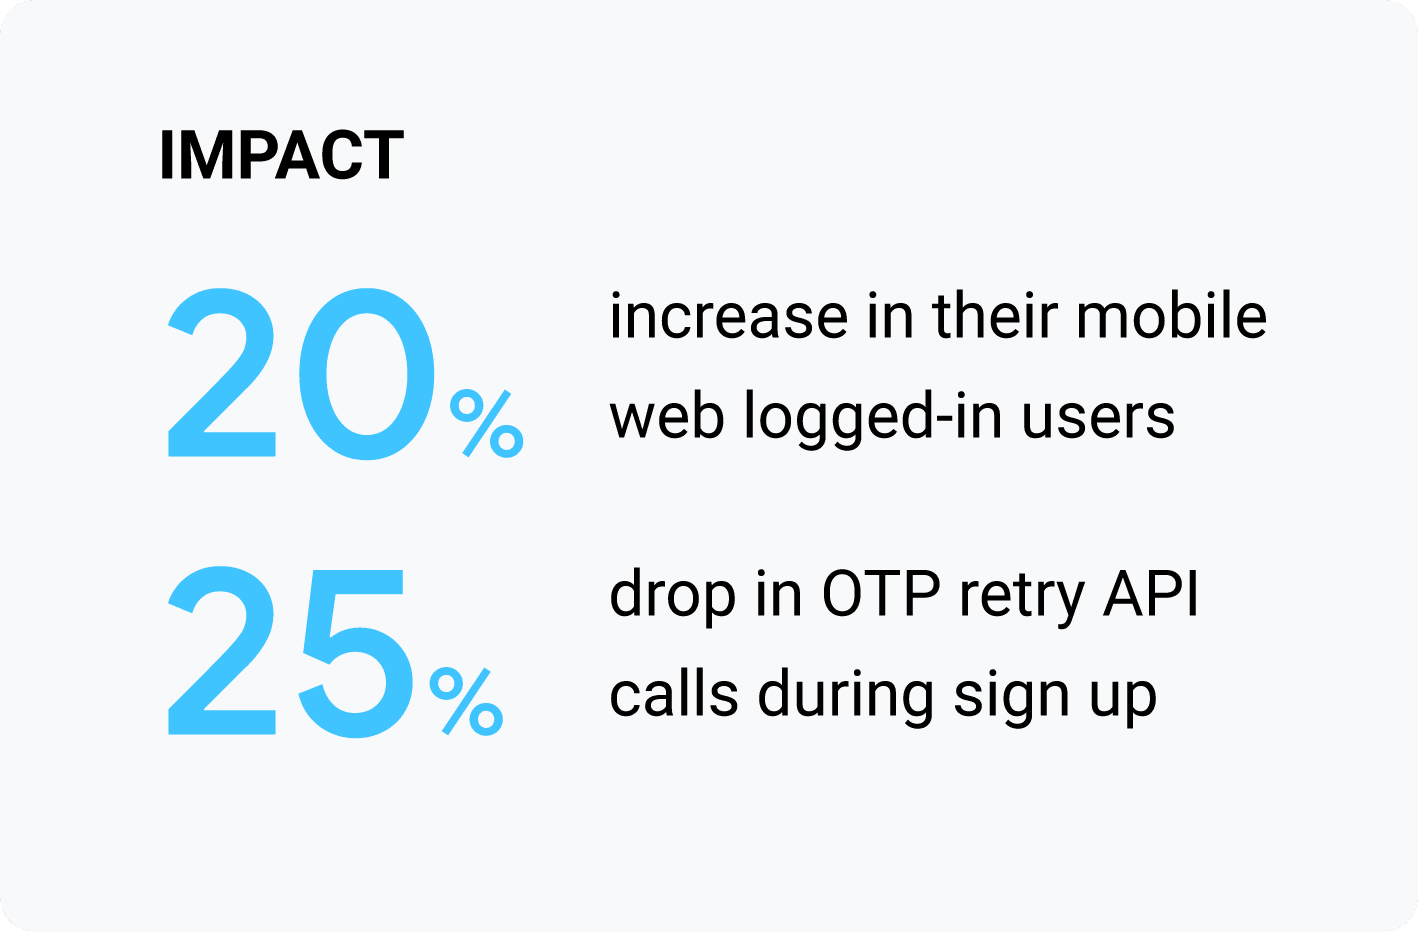 Dampak: 20% peningkatan pada pengguna yang login ke web seluler; penurunan 25% pada panggilan API percobaan ulang OTP selama pendaftaran.